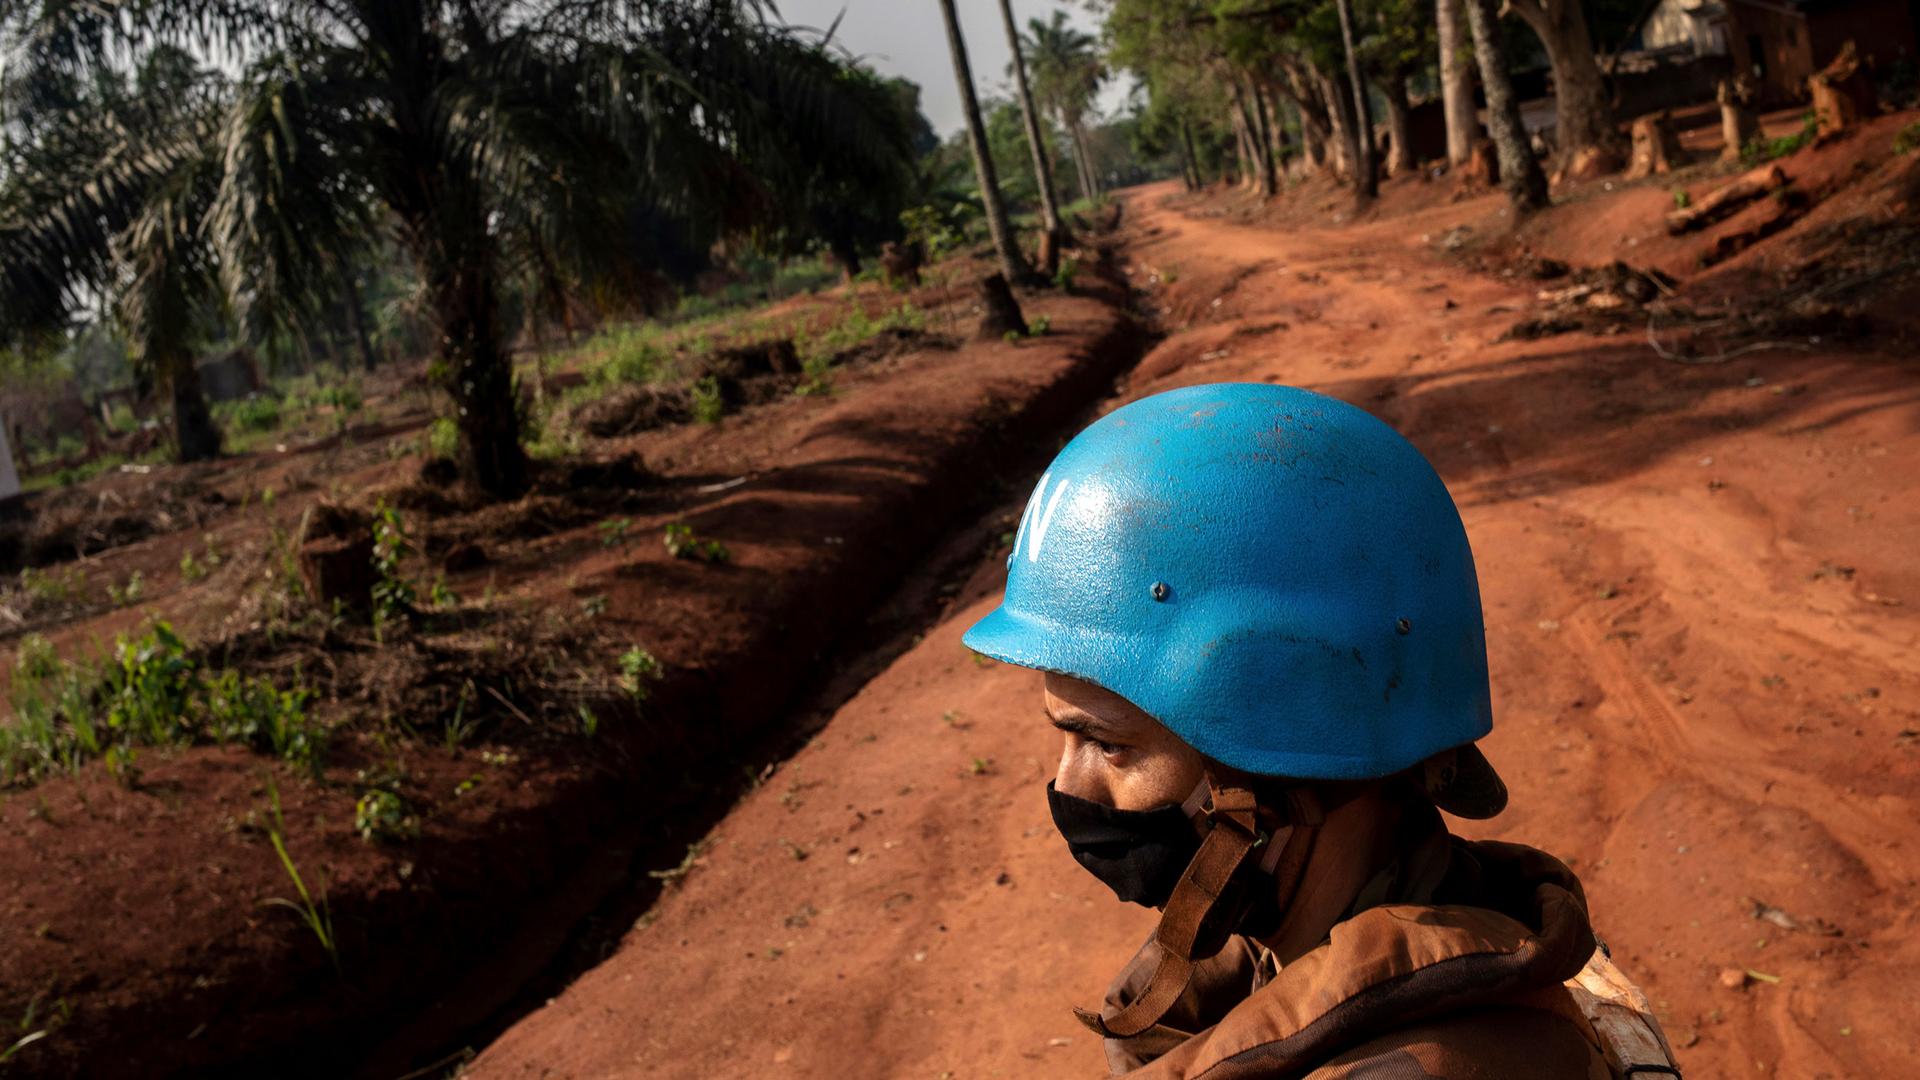 Moroccan UN peacekeepers wearing blue helmets patrol a rich soil road Bangassou, Central African Republic, Feb. 14, 2021. 